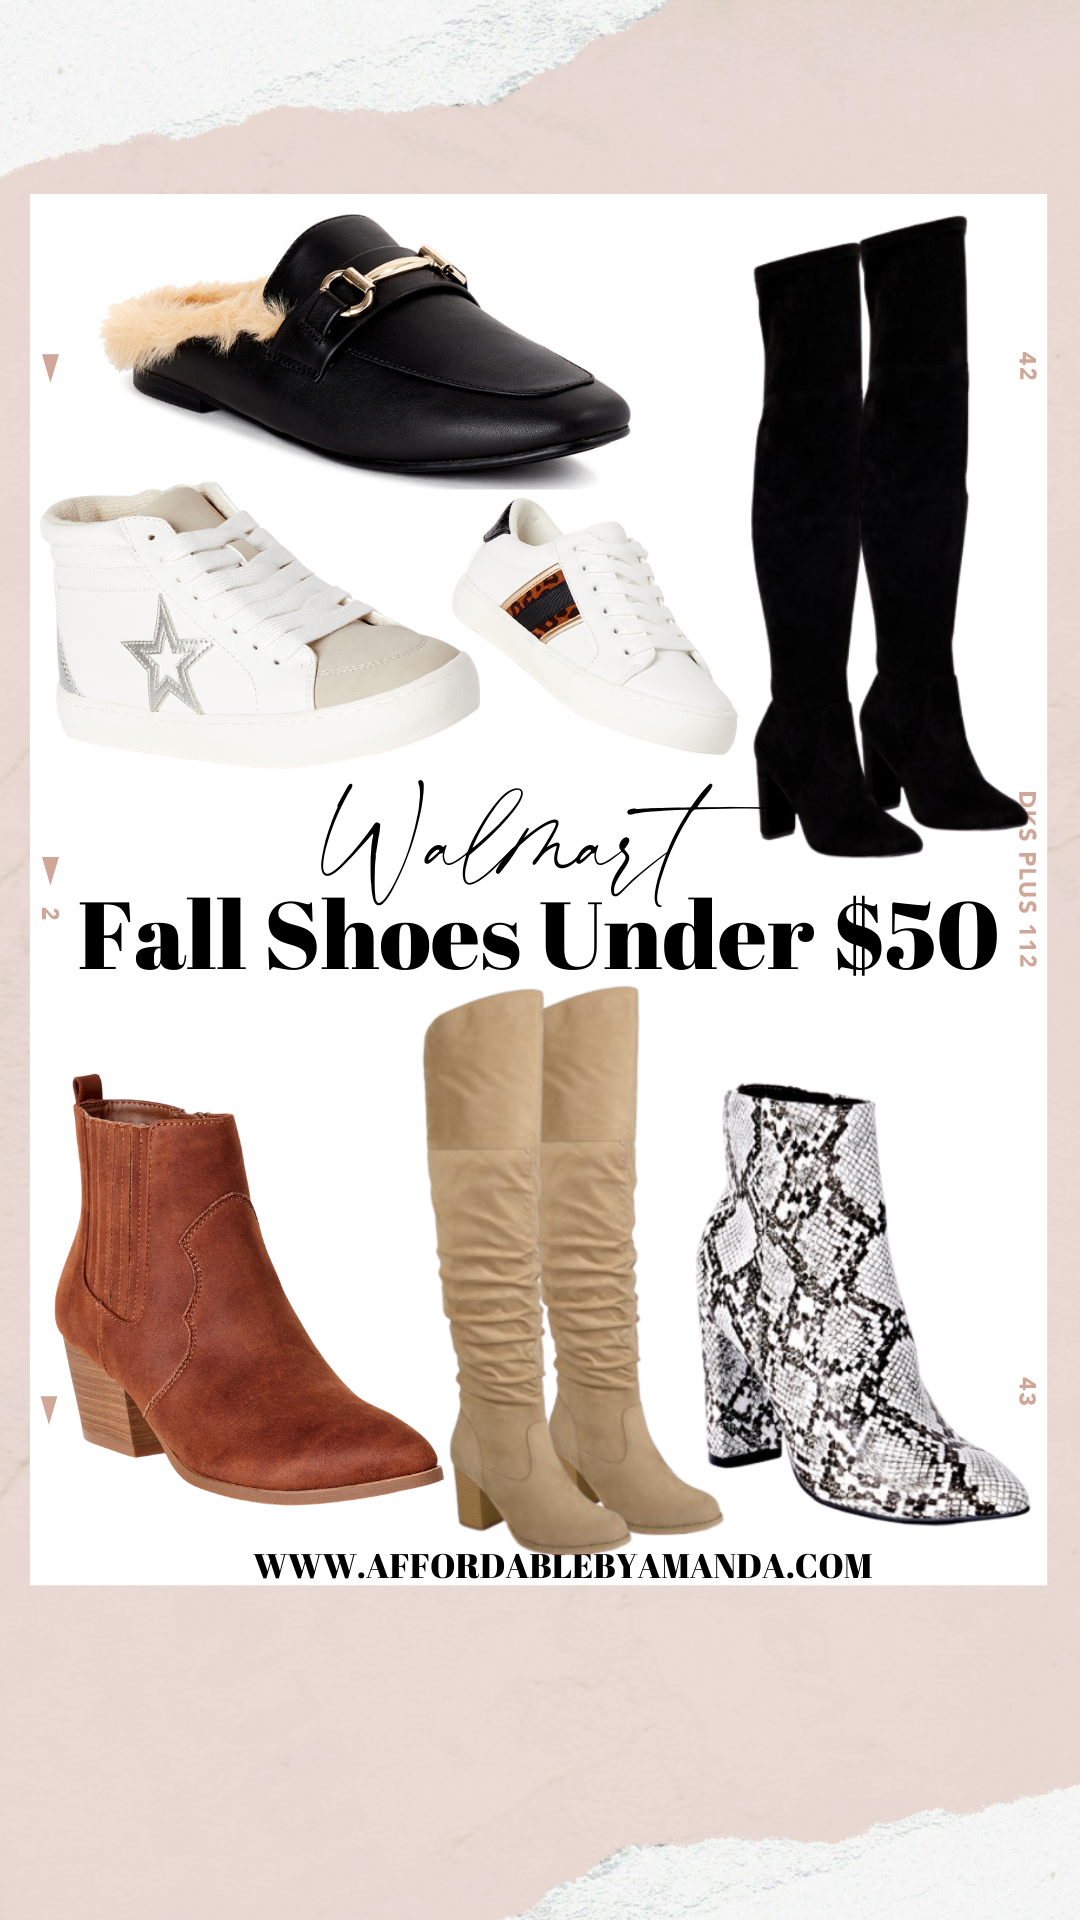 Walmart Fashion Finds - Fall Shoes at Walmart Under $50 - Women's Fall Trends Walmart.com